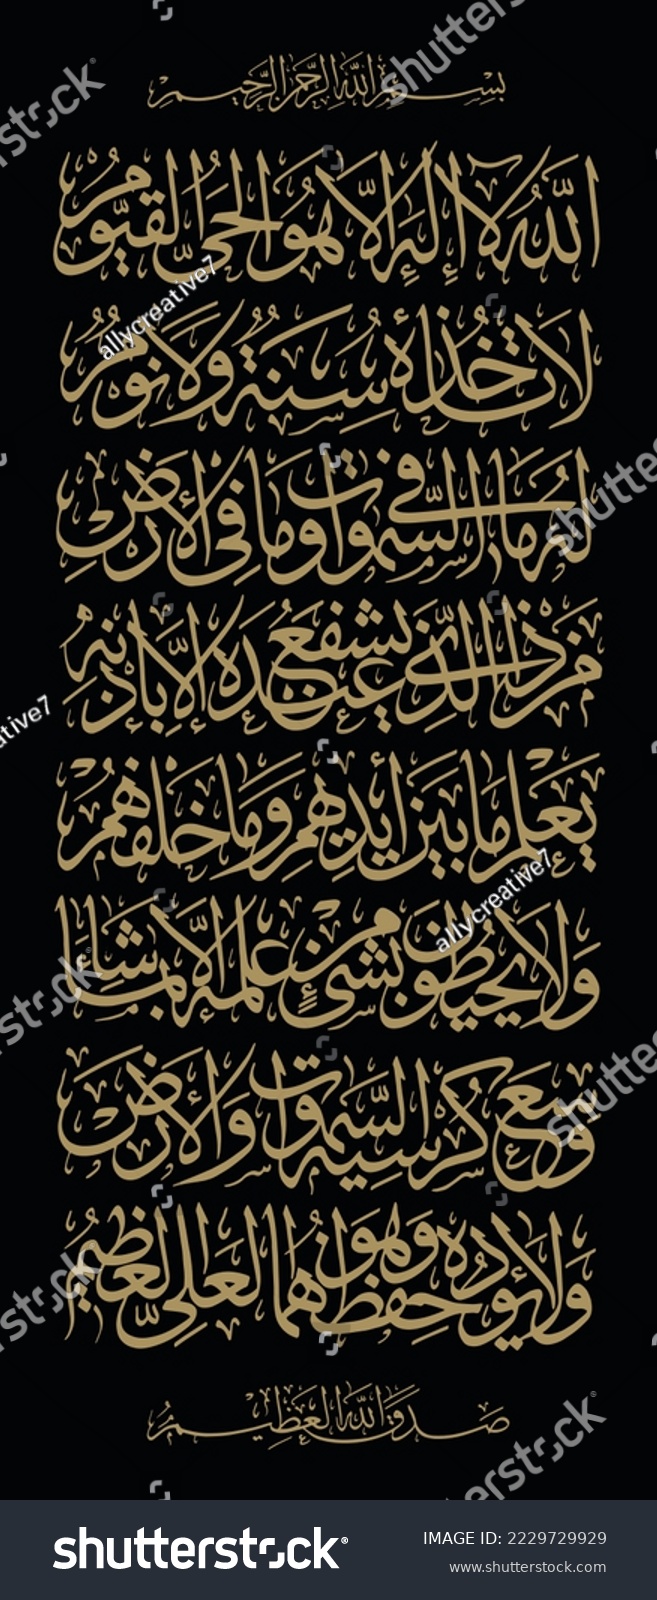 SVG of Arabic Calligraphy of Ayatul Kursi, Ayat tul Kursi. Surah Al Baqarah 2, 255 of the Noble Quran. Translation, 